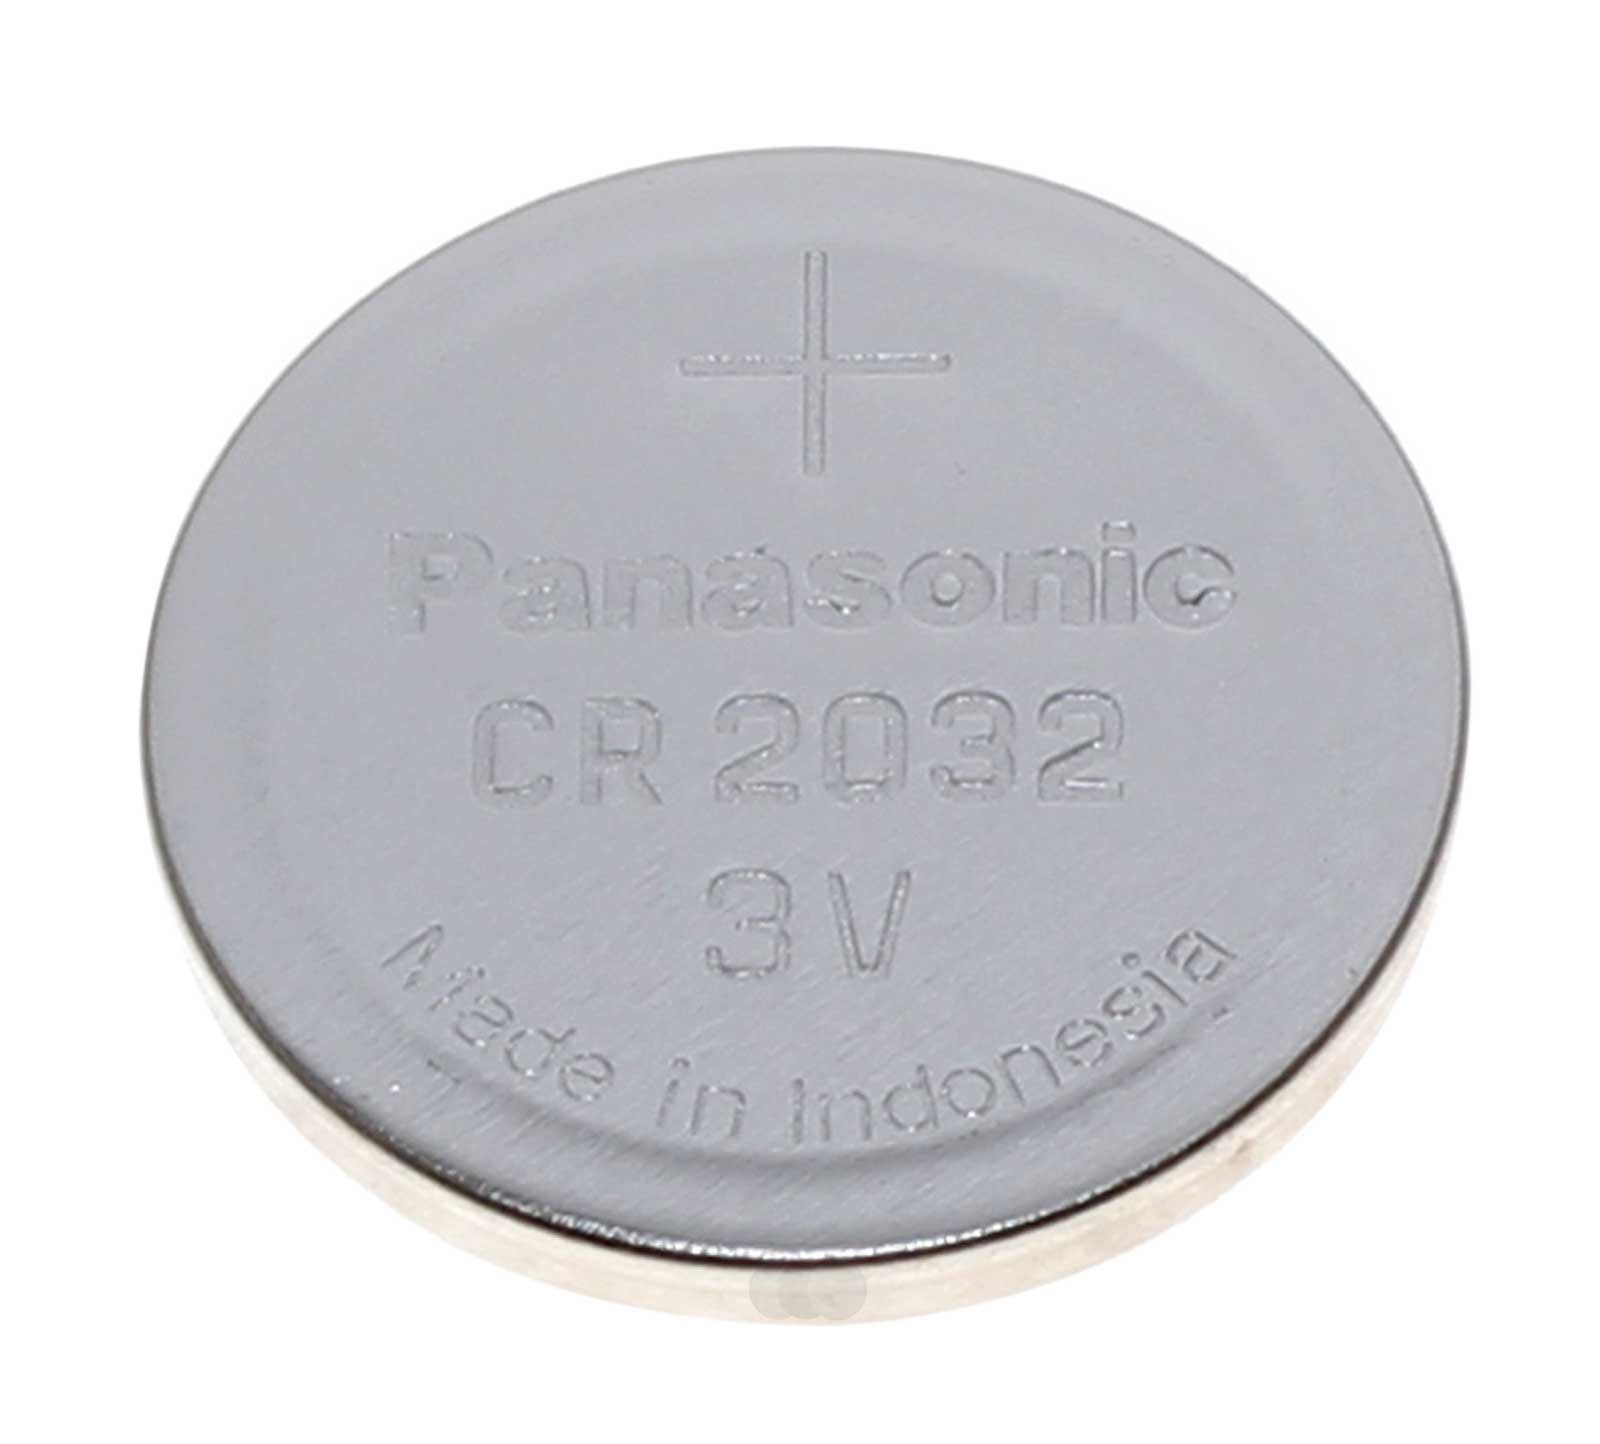 Batterie für Golf 4 Autoschlüssel Funksender, Panasonic CR2032 Lithium Knopfzelle, 3V, 220mAh